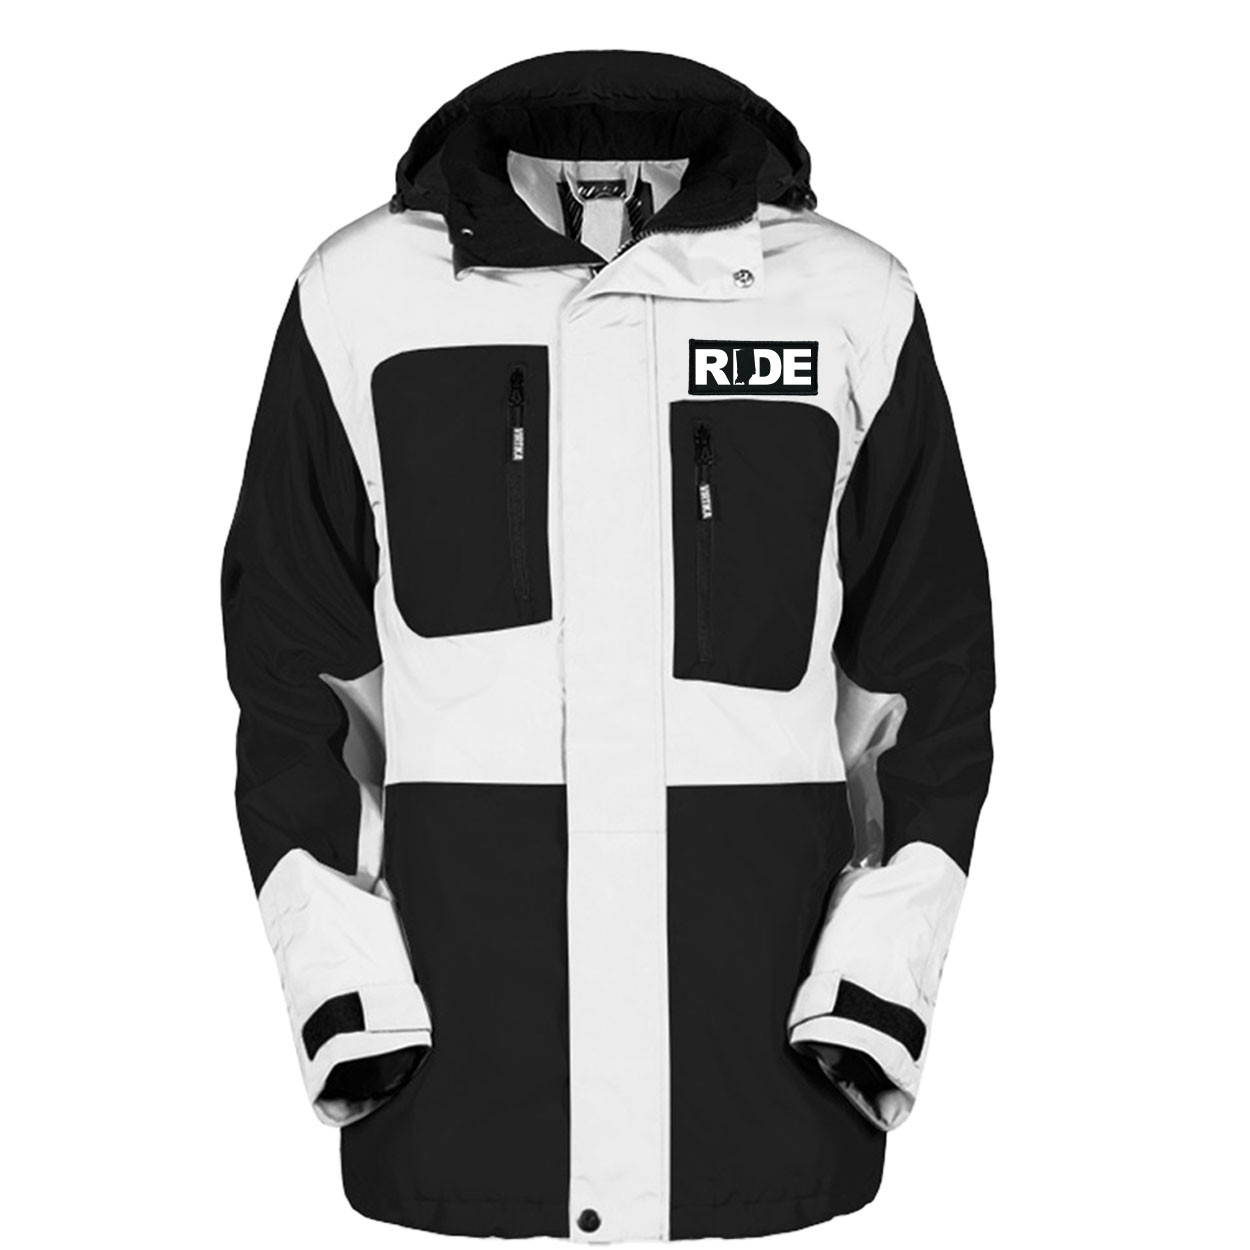 Ride Indiana Pro Waterproof Breathable Winter Virtika Jacket Black/White (White Logo)